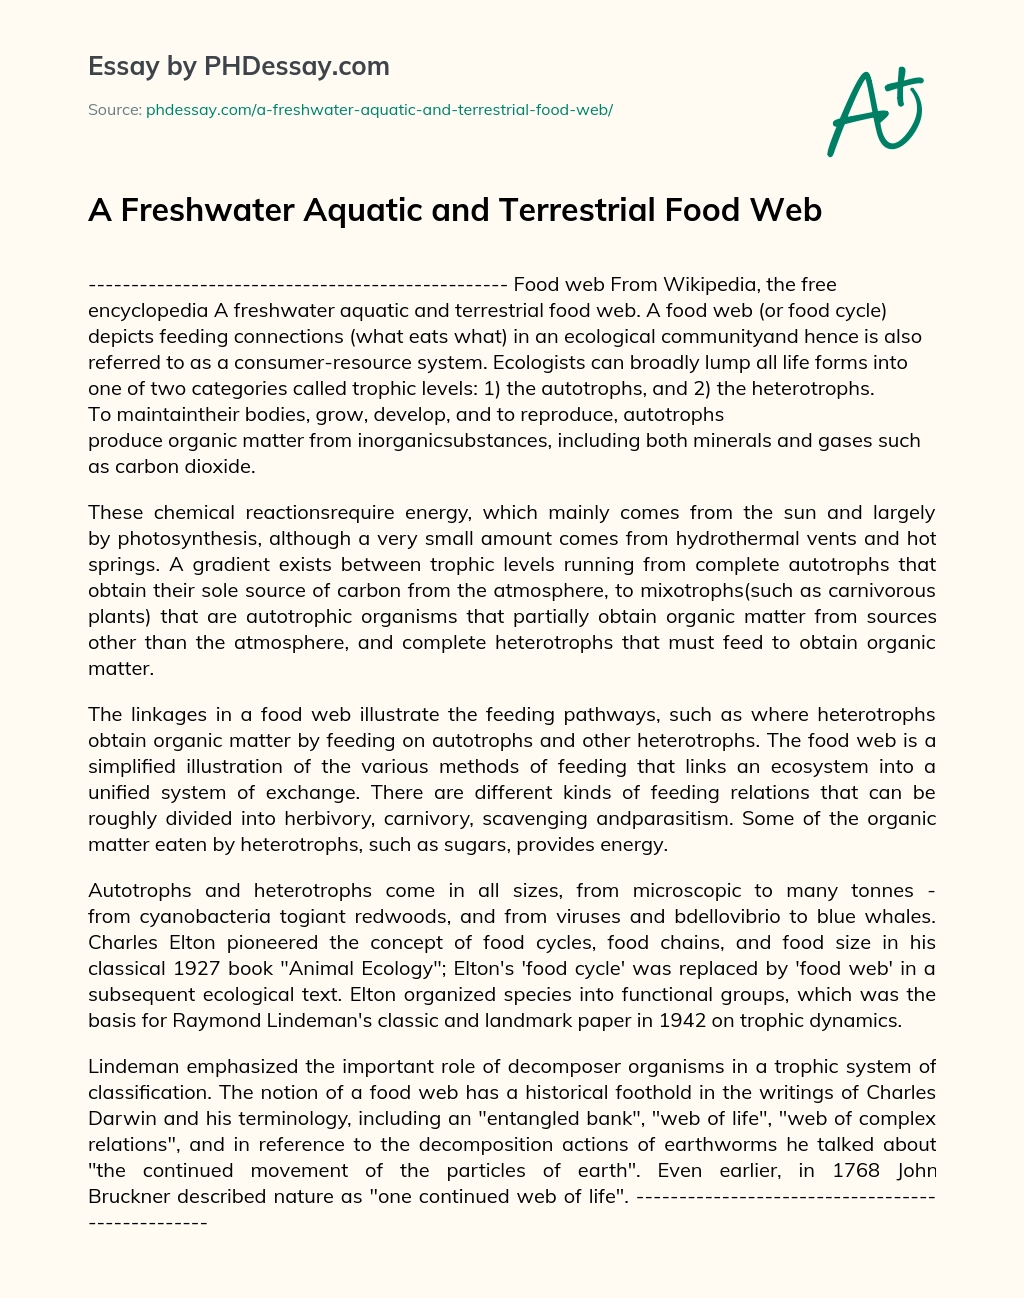 A Freshwater Aquatic and Terrestrial Food Web essay